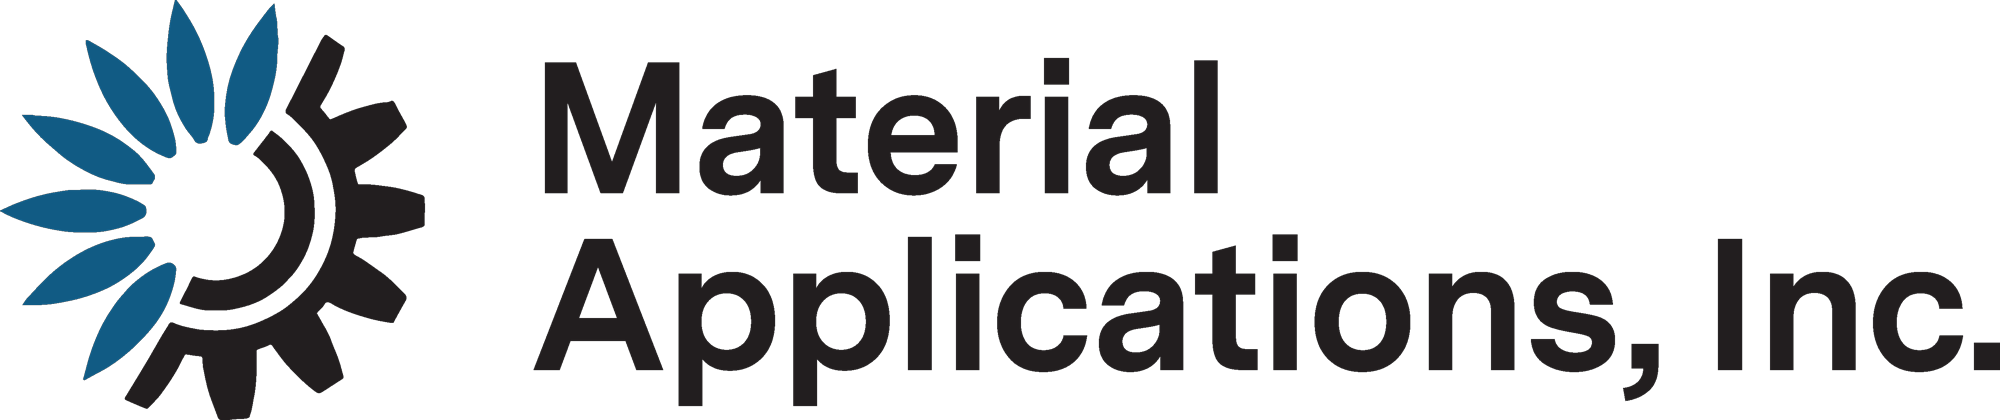 Material Applications, Inc.